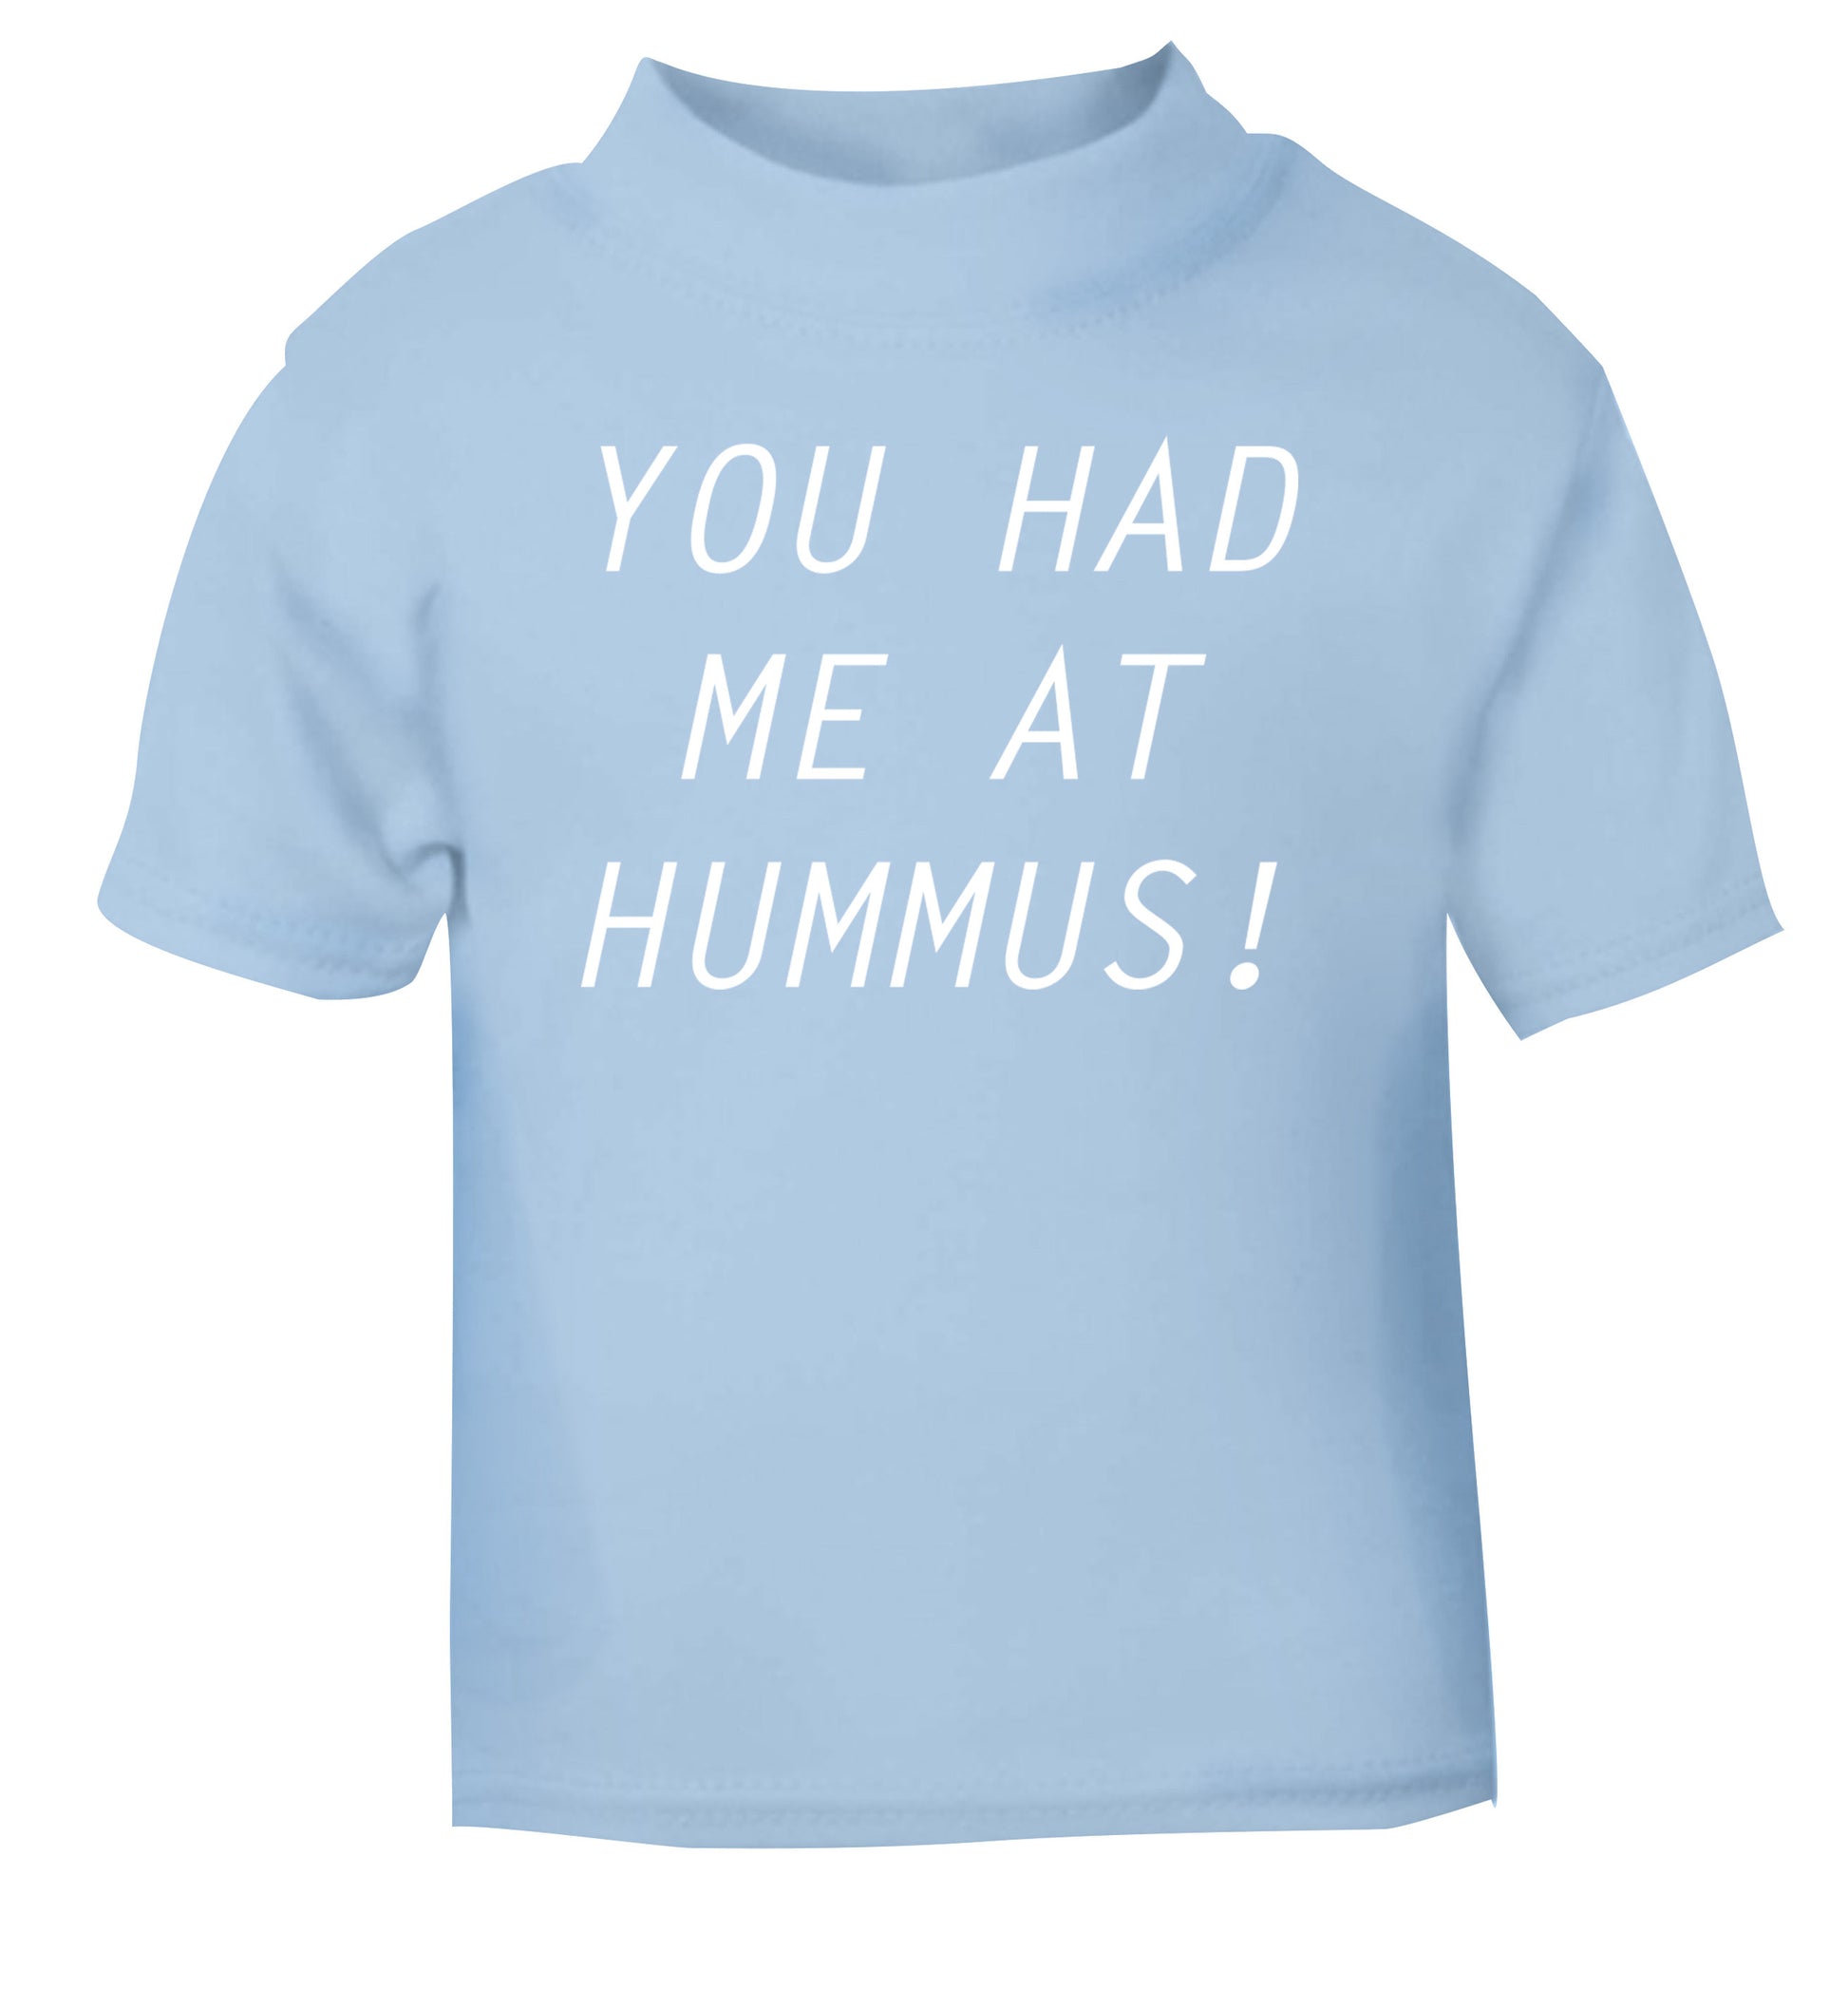 You had me at hummus light blue Baby Toddler Tshirt 2 Years